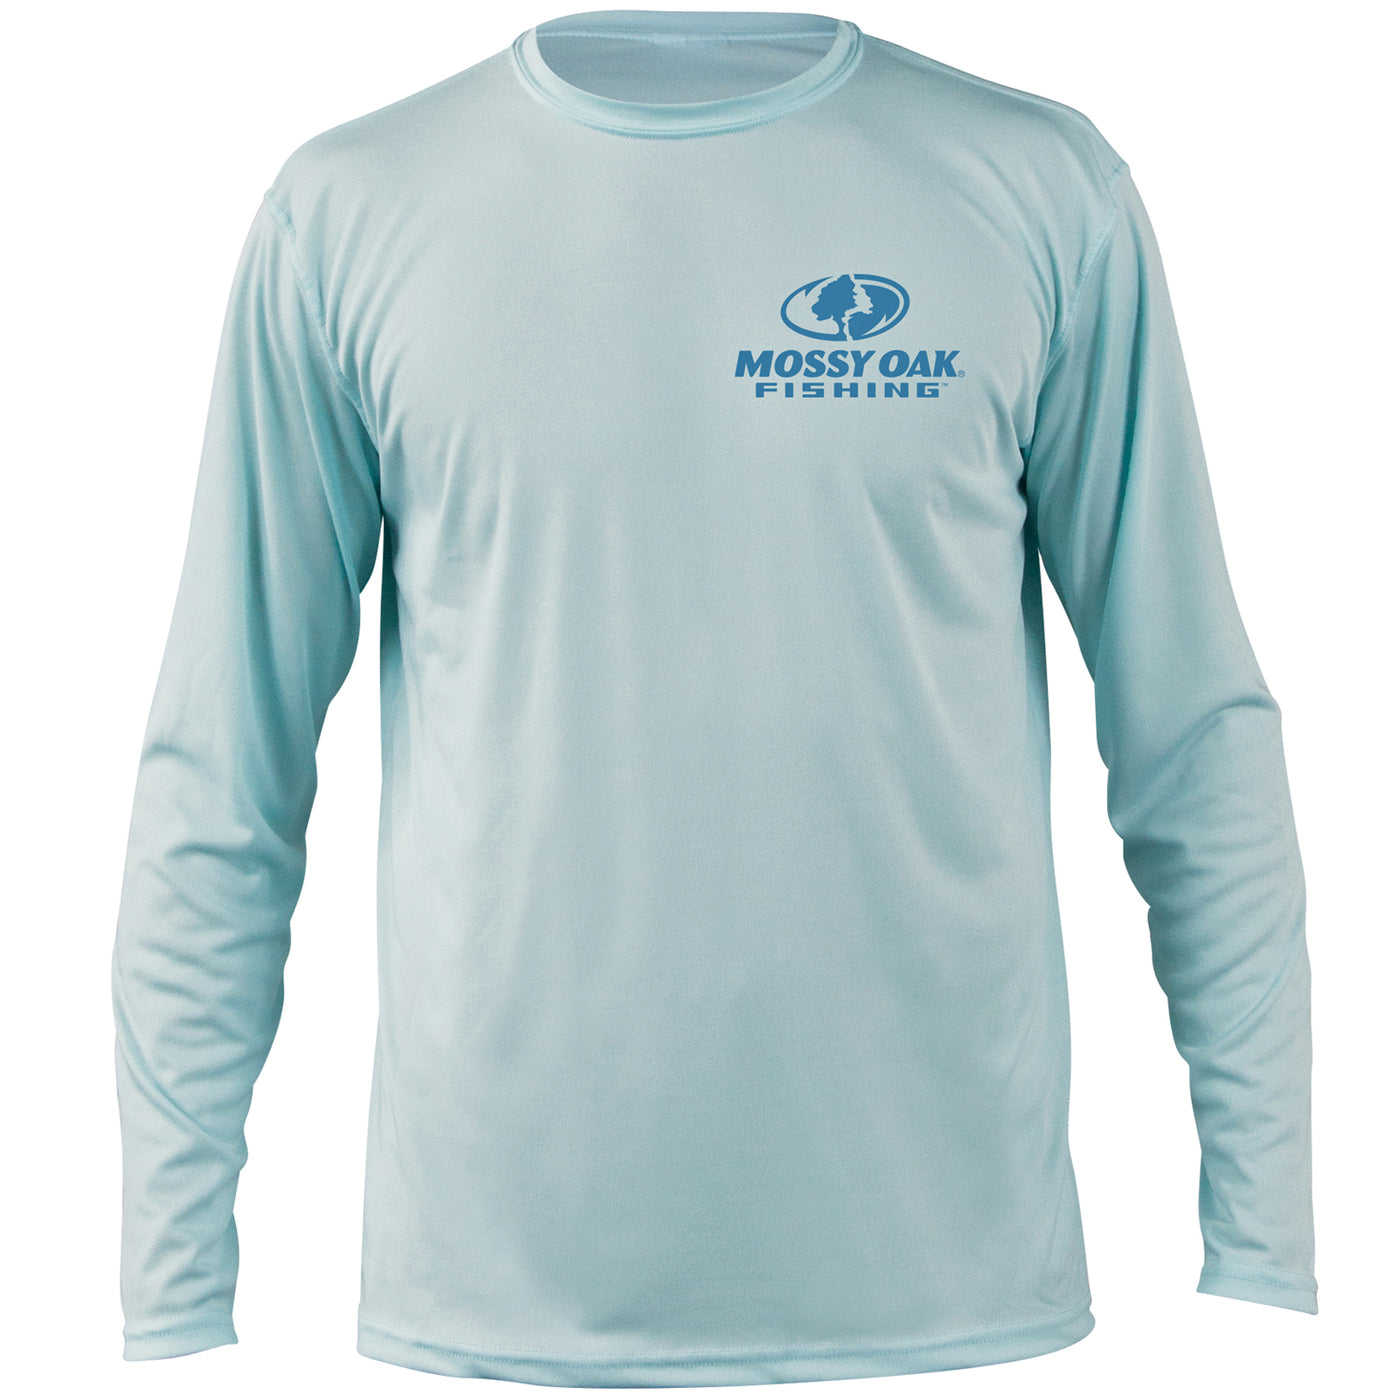 Mossy Oak Fishing Graphic Long Sleeve Shirt Artic Blue Front